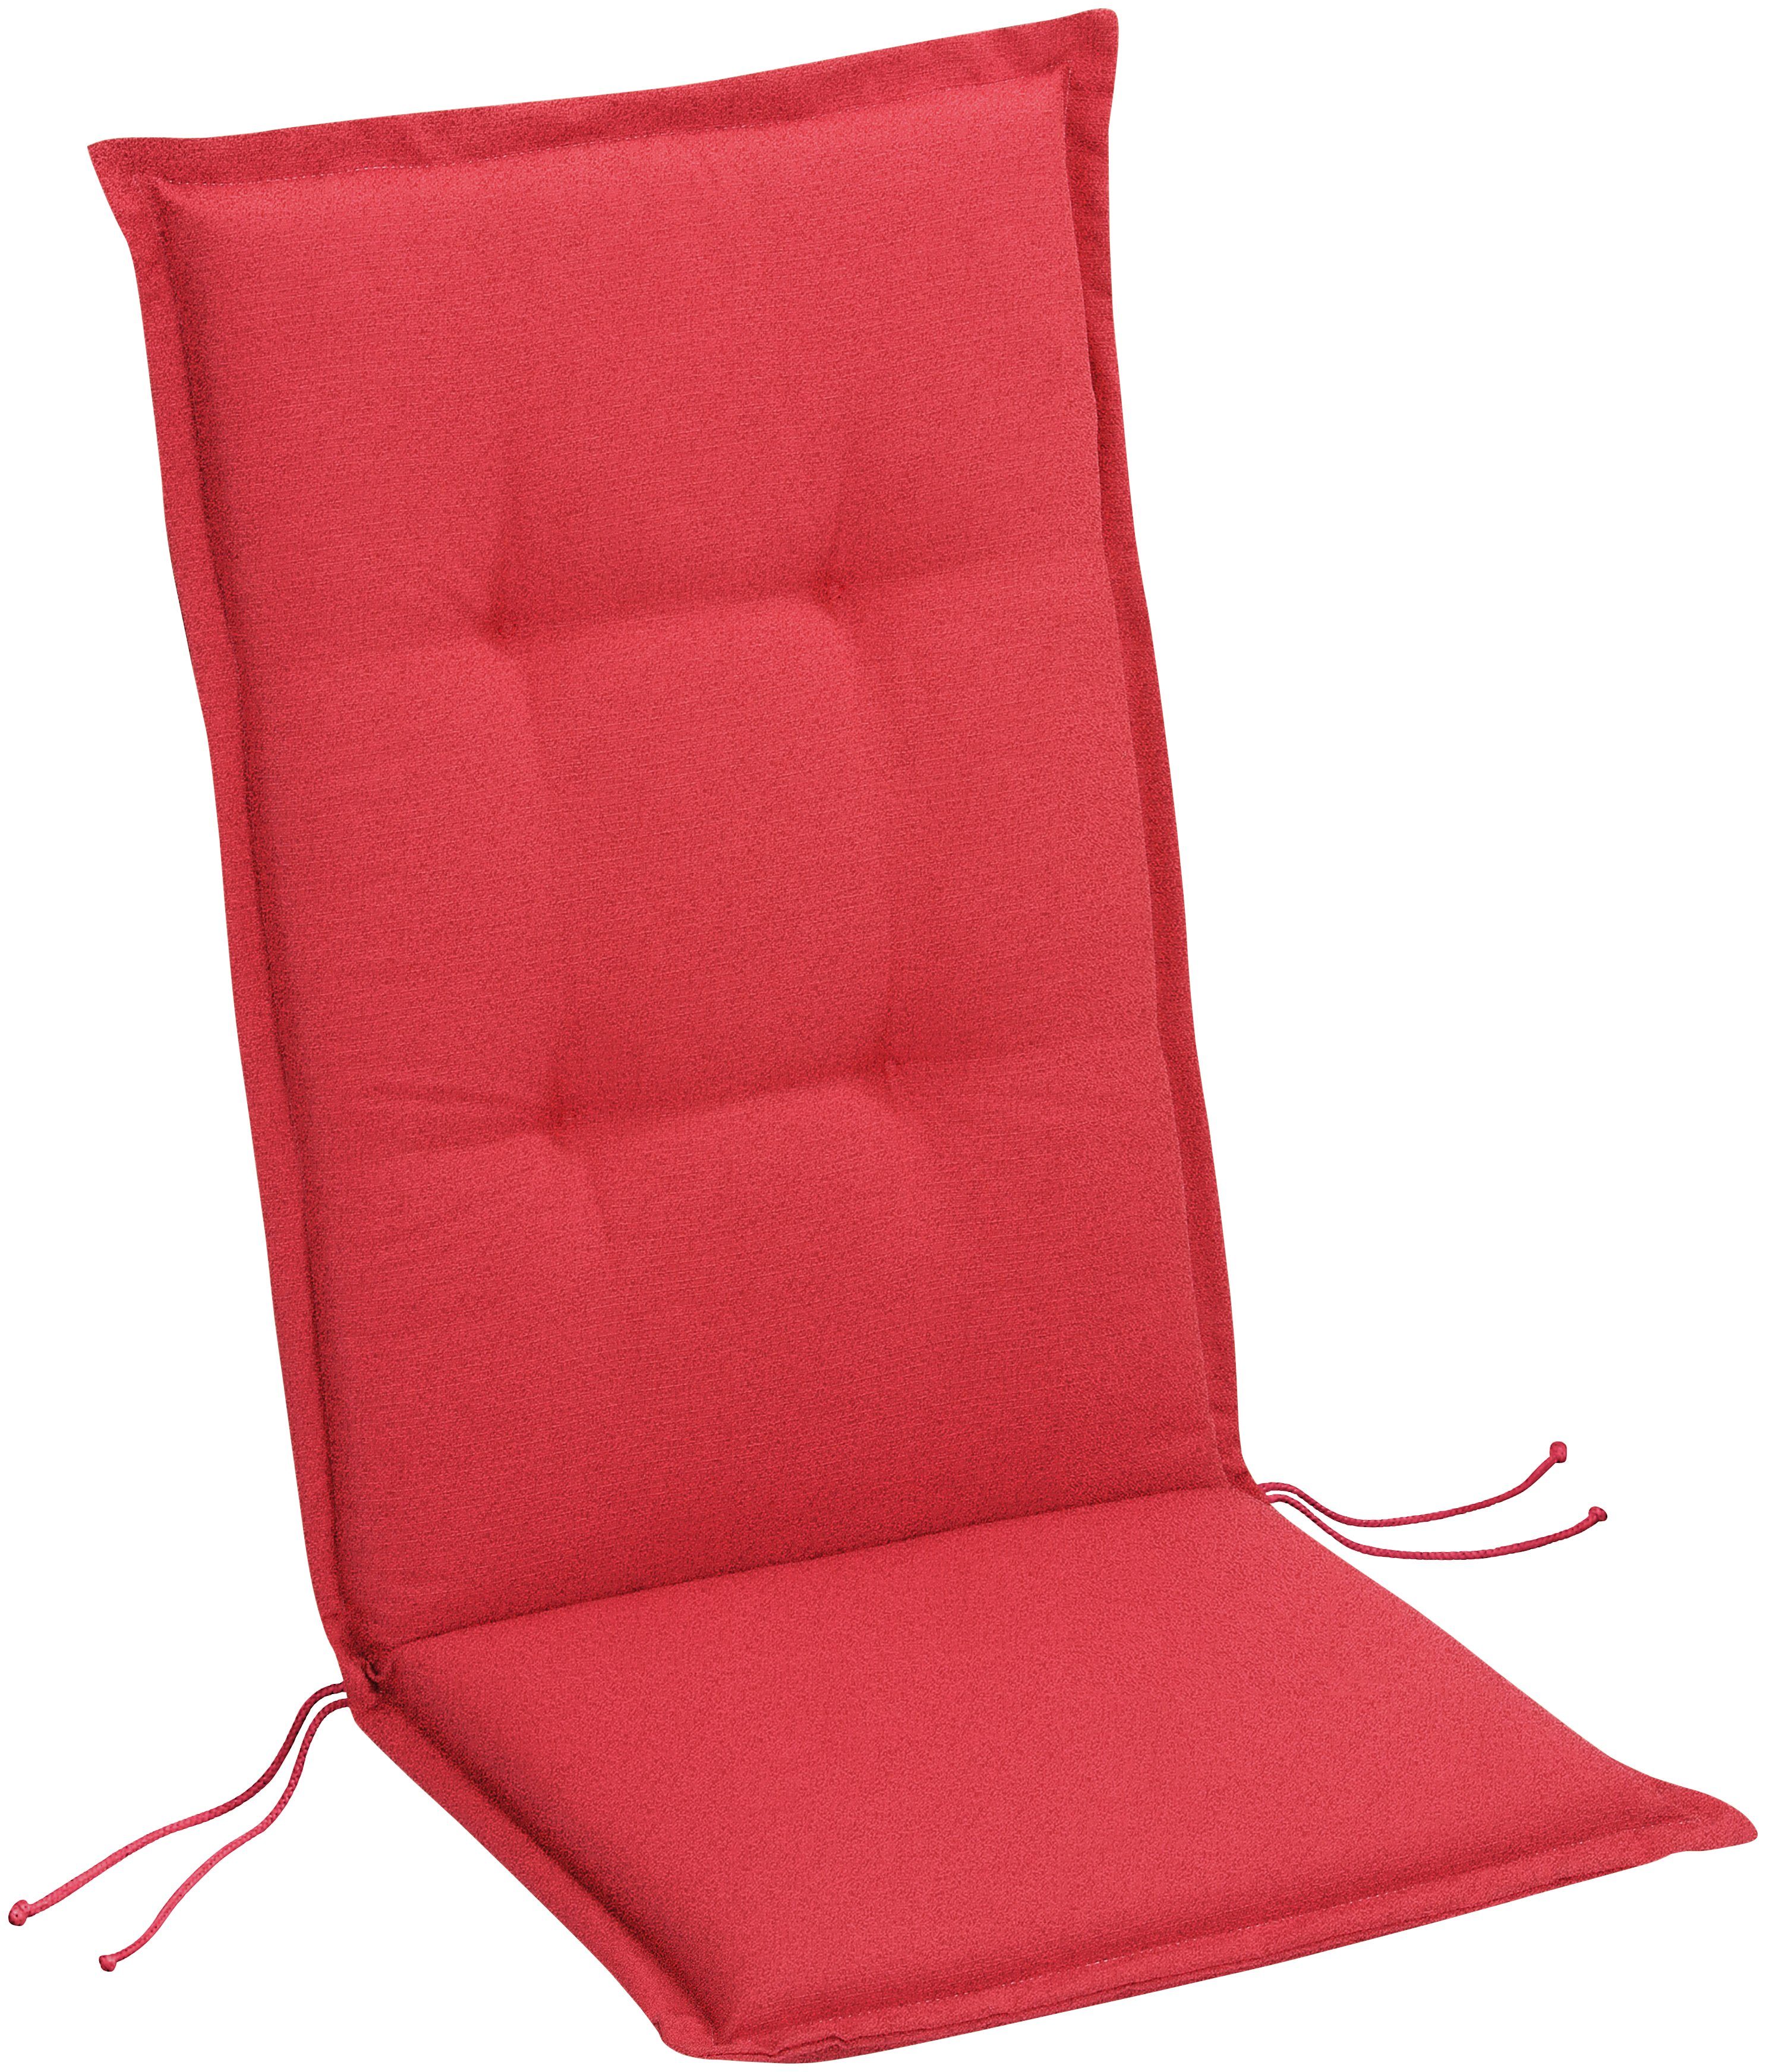 St) (1 Best Sesselauflage rot Selection-Line,